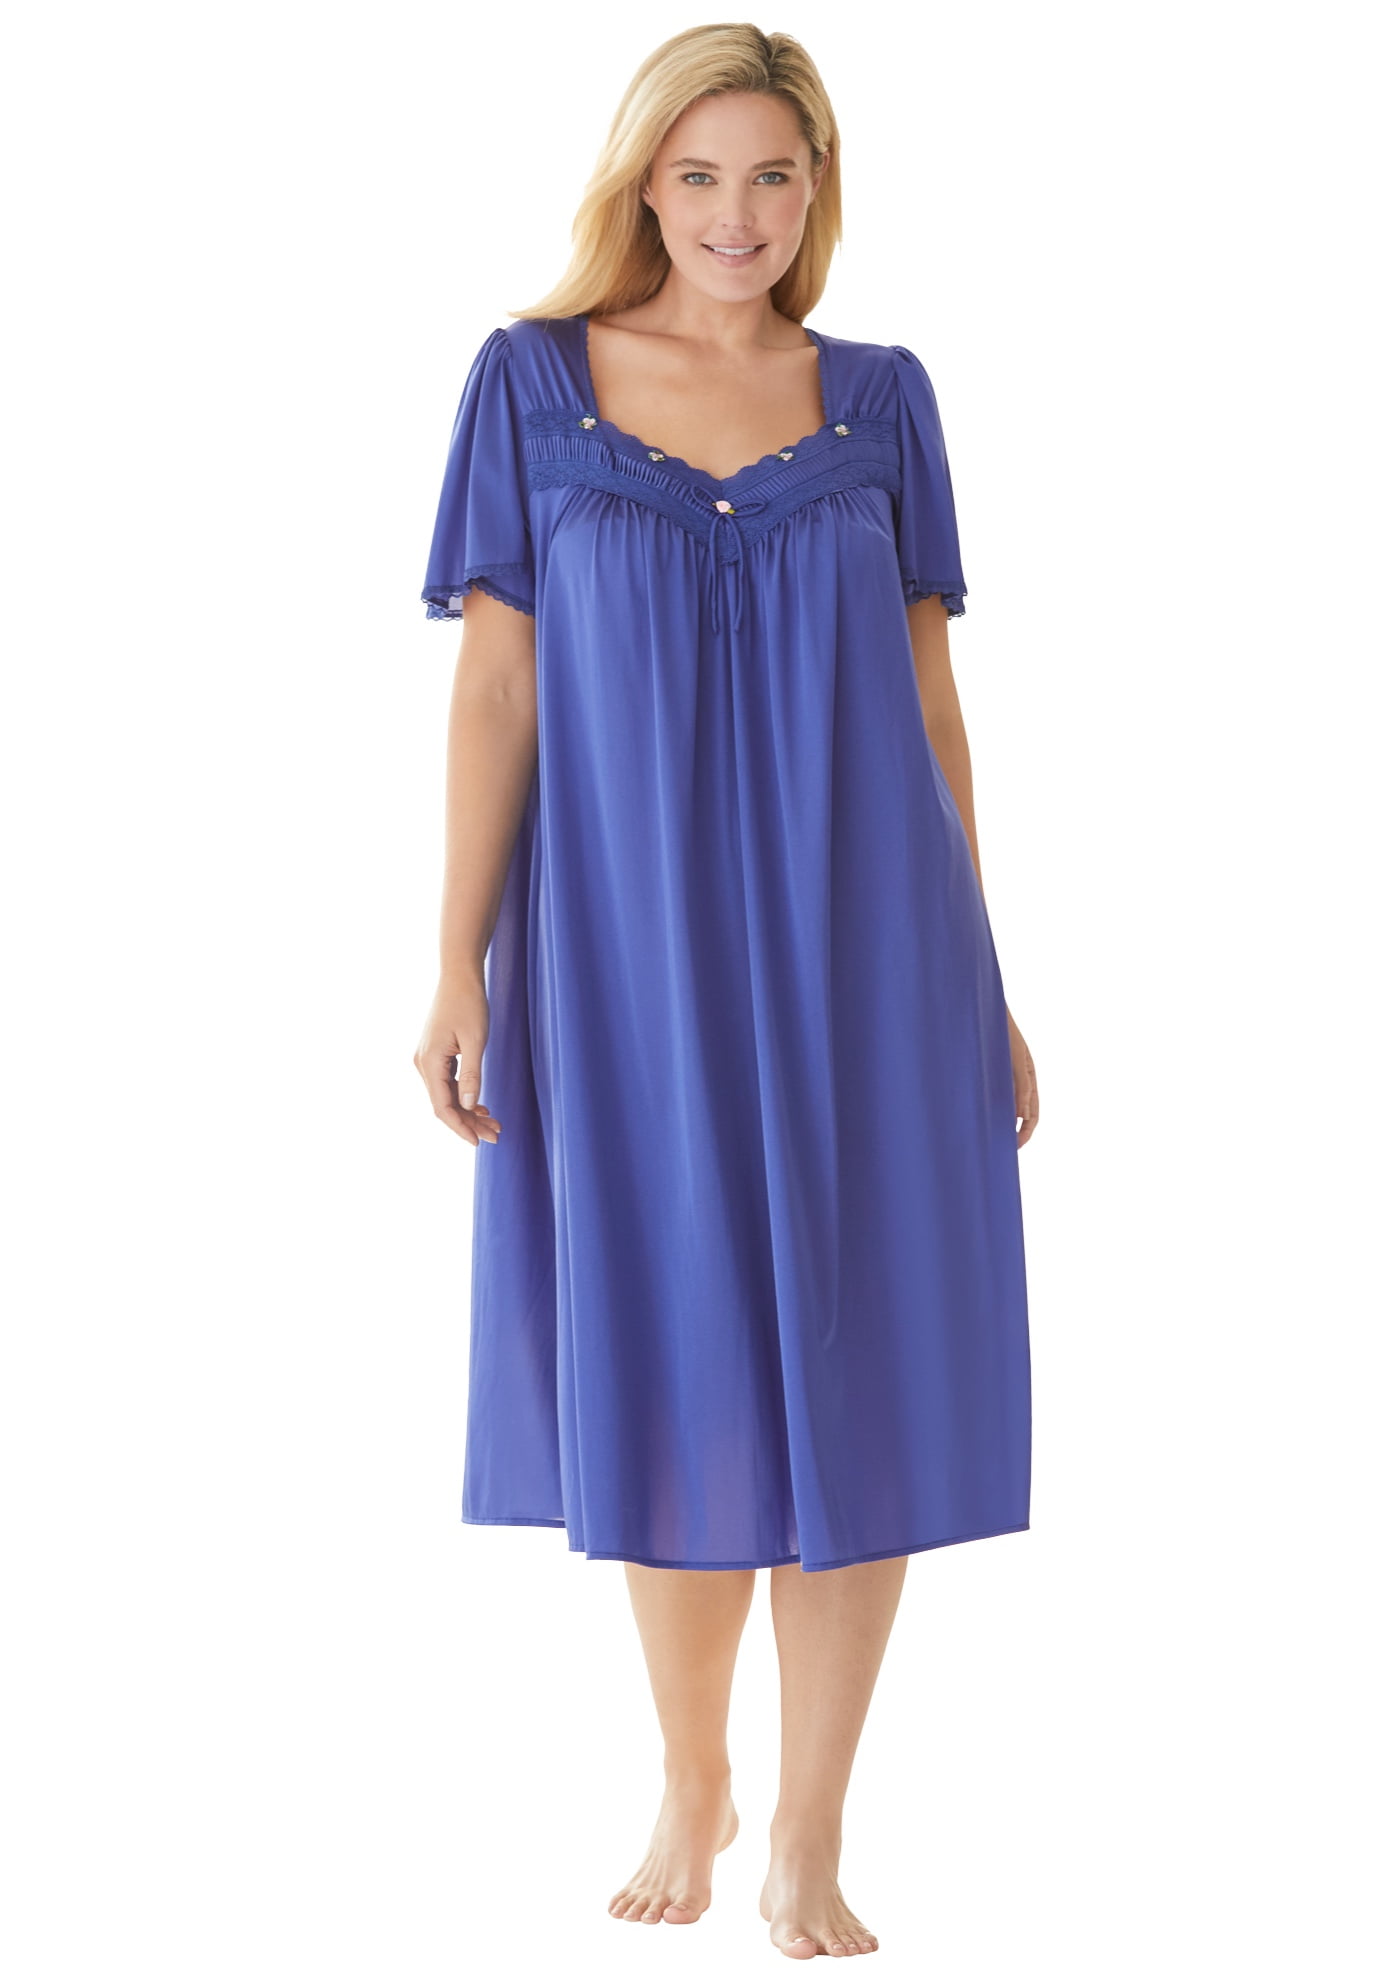 Details about   Silky Soft Nightgown Women Sleepwear Crochet Trim Sleep Dress Black 3X Size